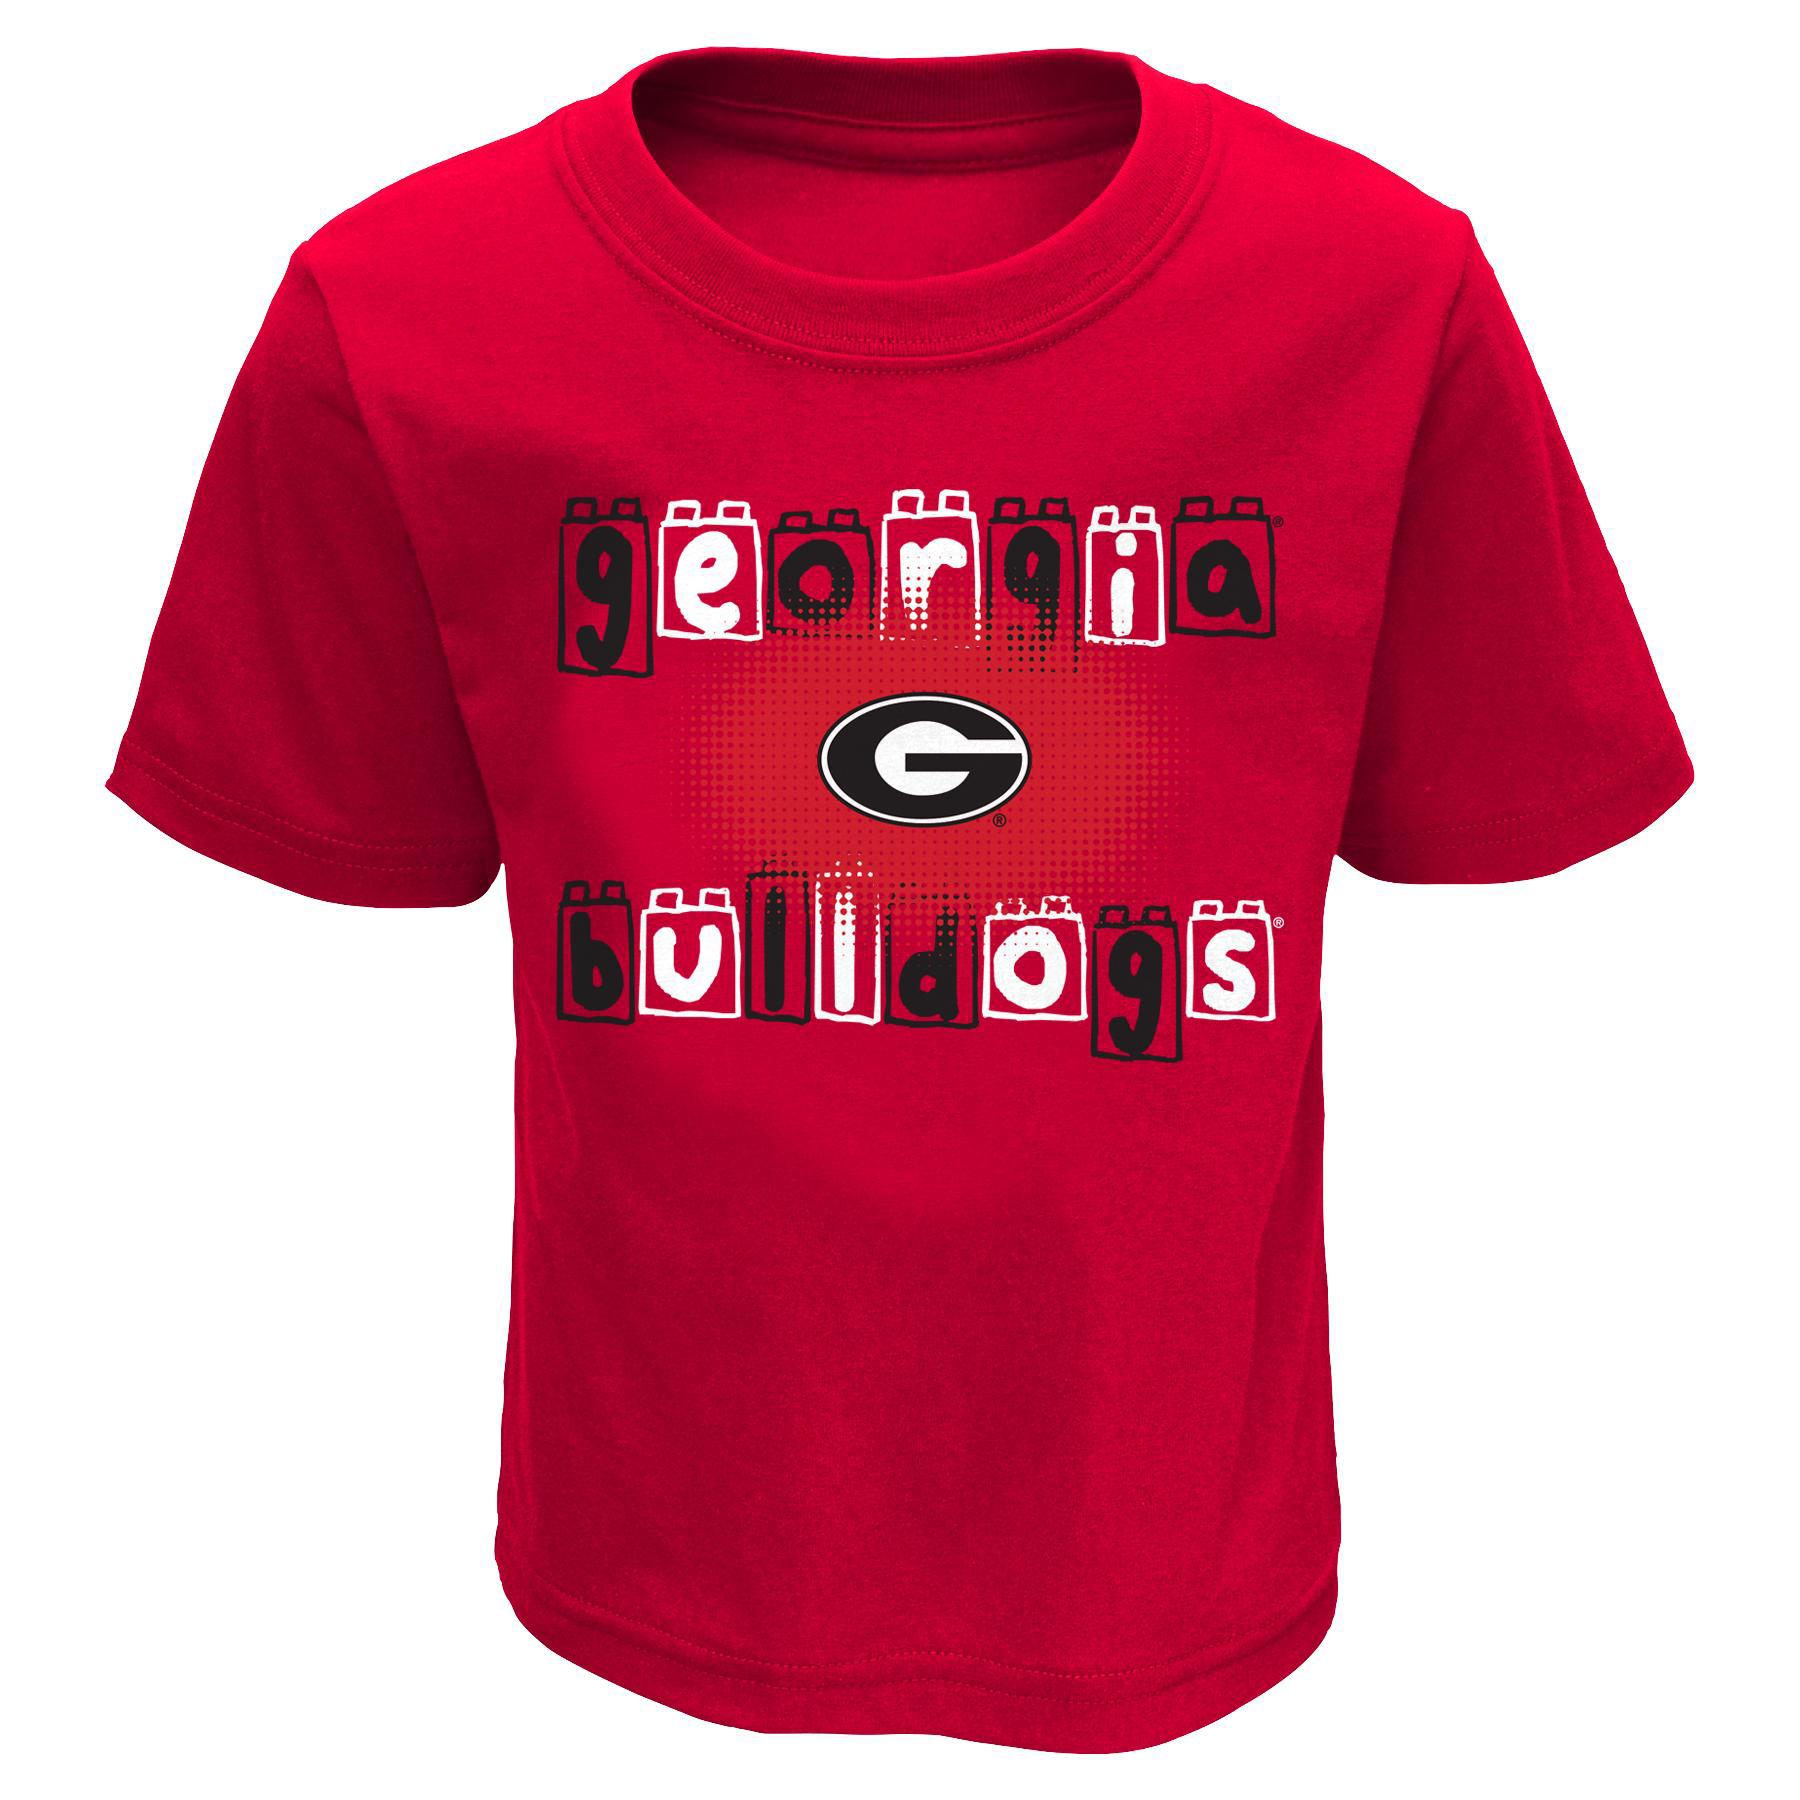 NCAA Toddler's Graphic T-Shirt - Georgia Bulldogs